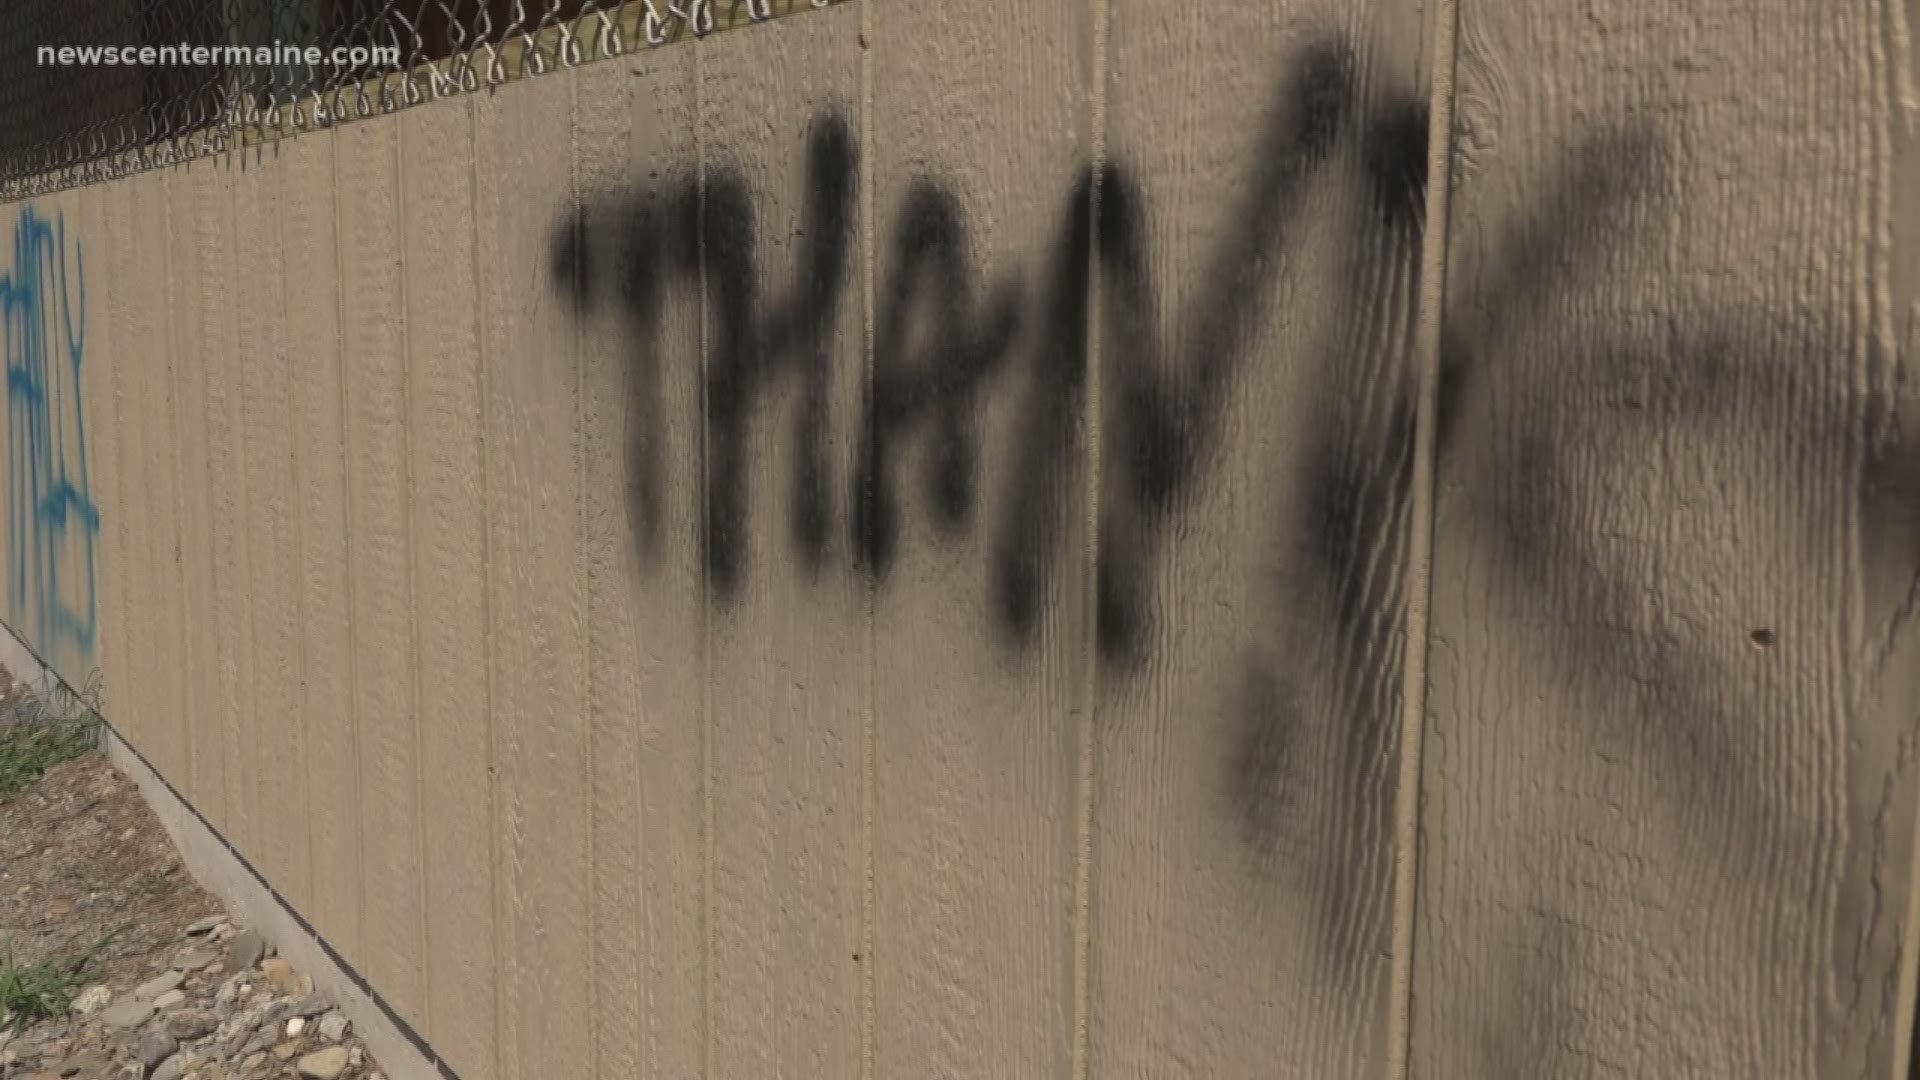 Winterport police are seeking information regarding vandalism that took place sometime over the weekend in Abbott Park.